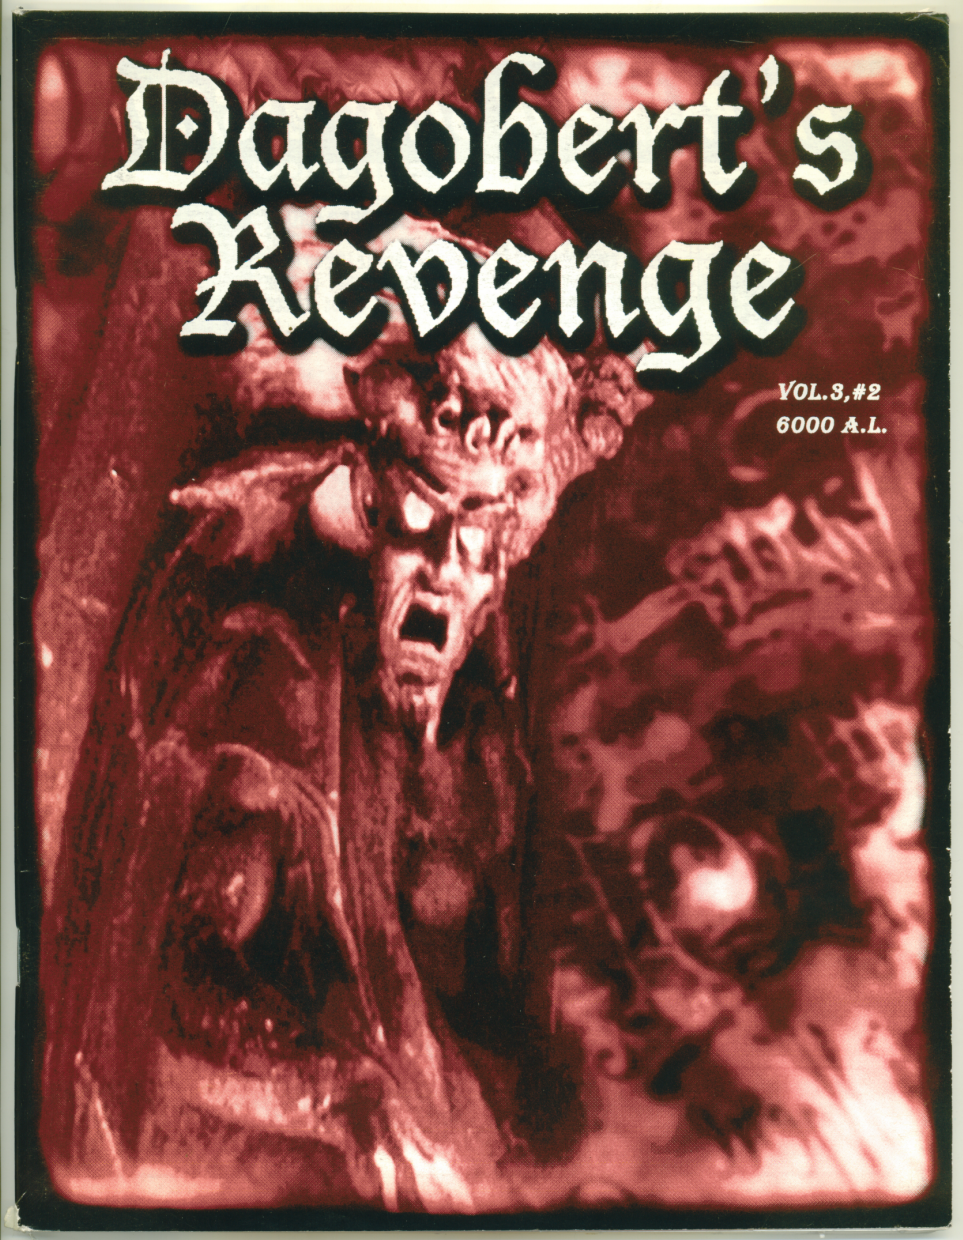 Tracy Twyman's Dagobert's Revenge Magazine Cover, Volume 3, Issue 2